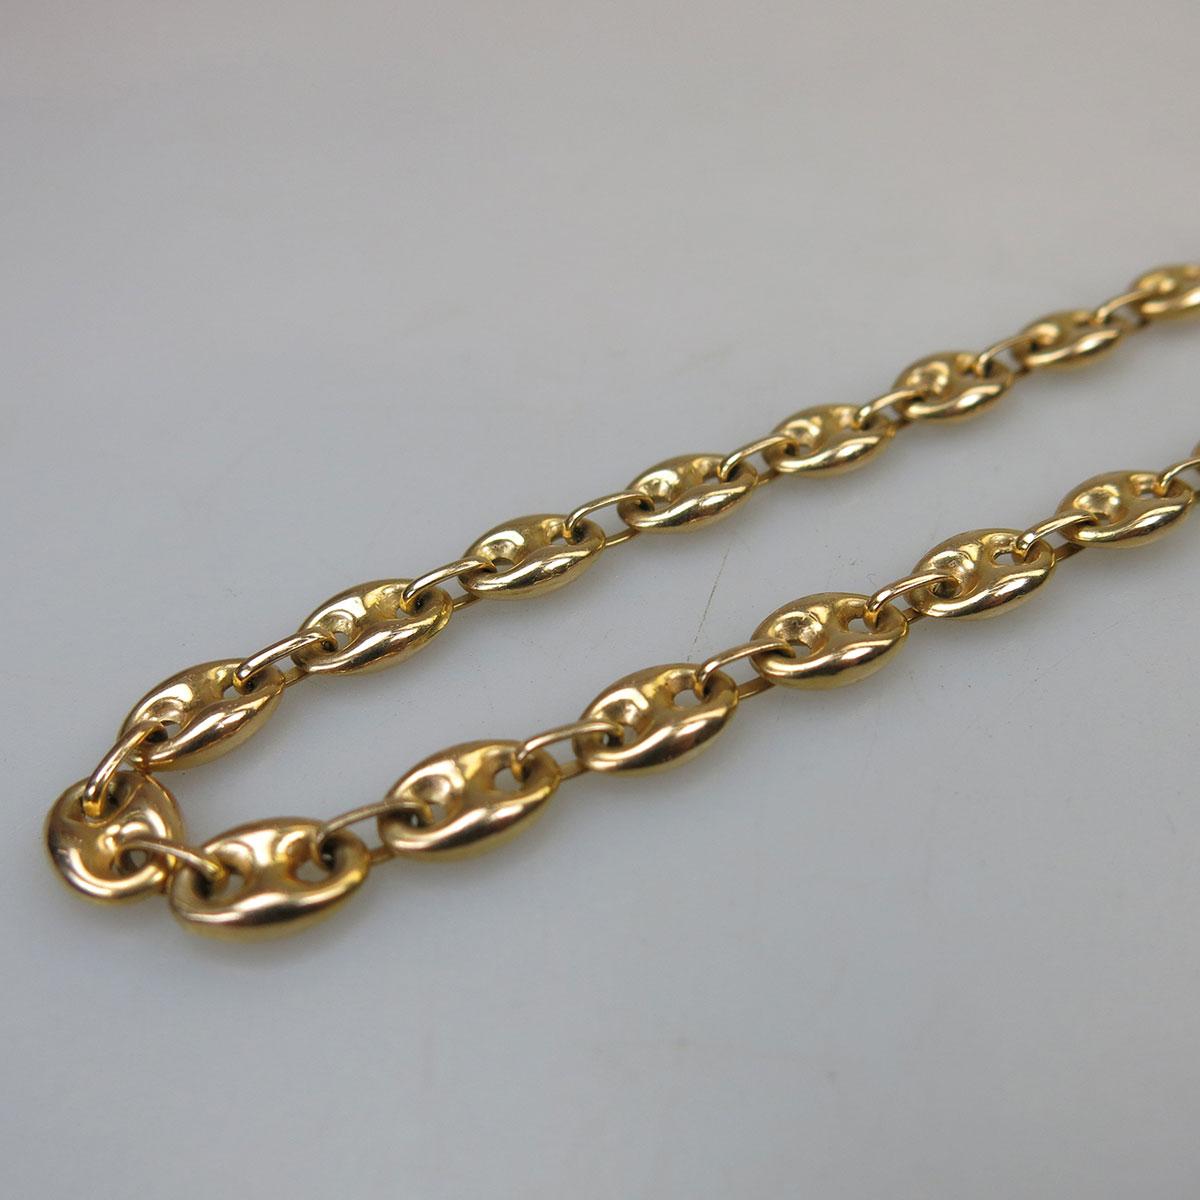 Dutch 14k Yellow Gold “Gucci” Link Chain